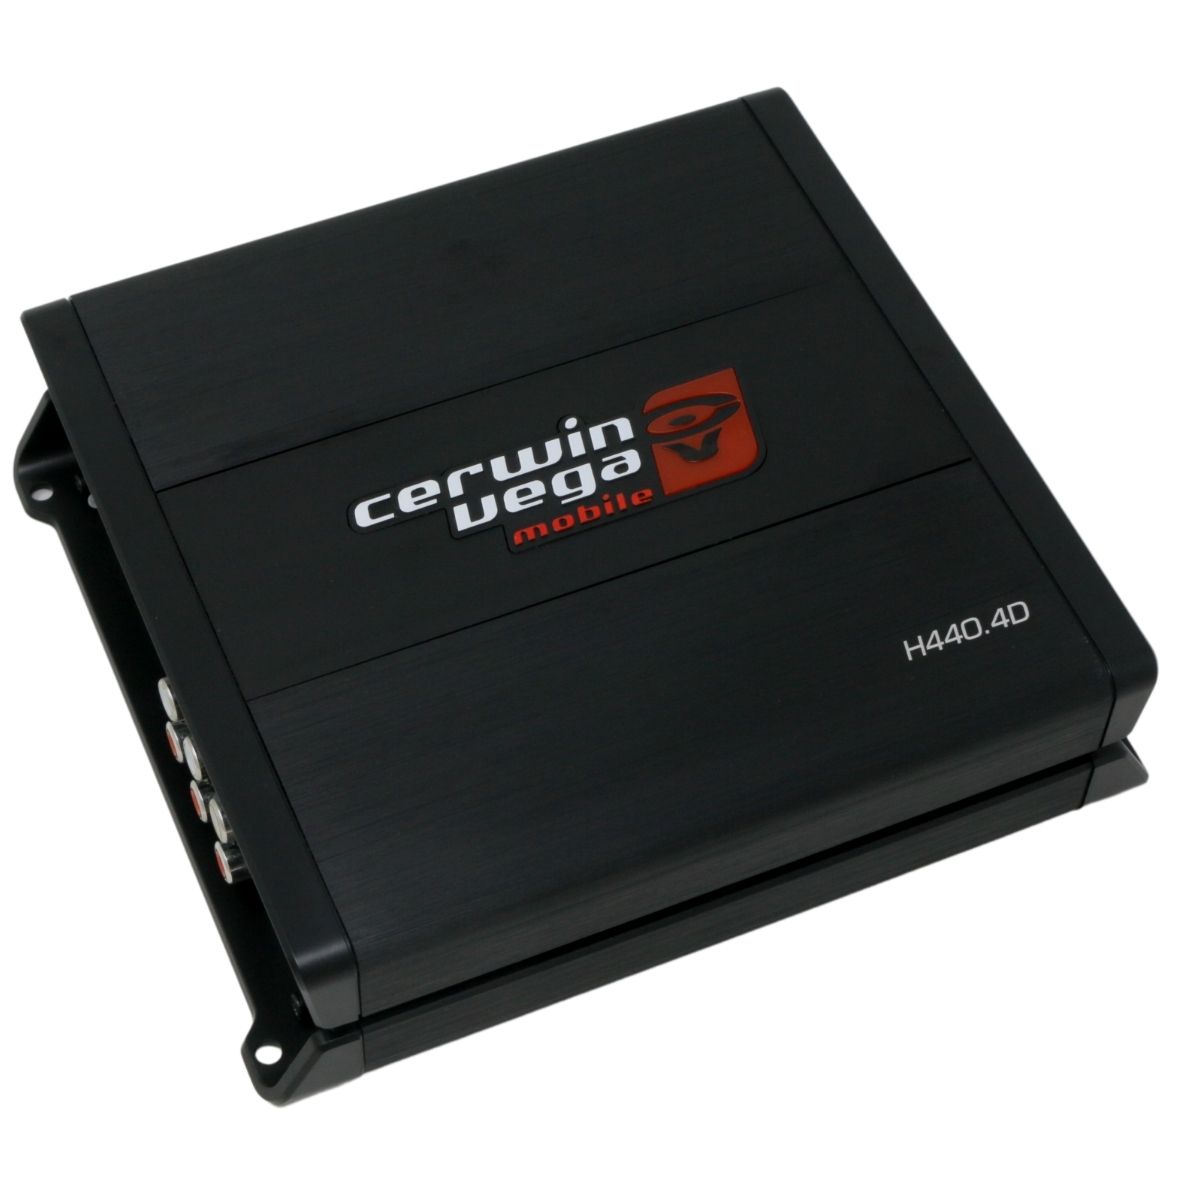 Cerwin Vega H440.4D 440W RMS Full Range Class-D 4 Channel Digital Amplifier